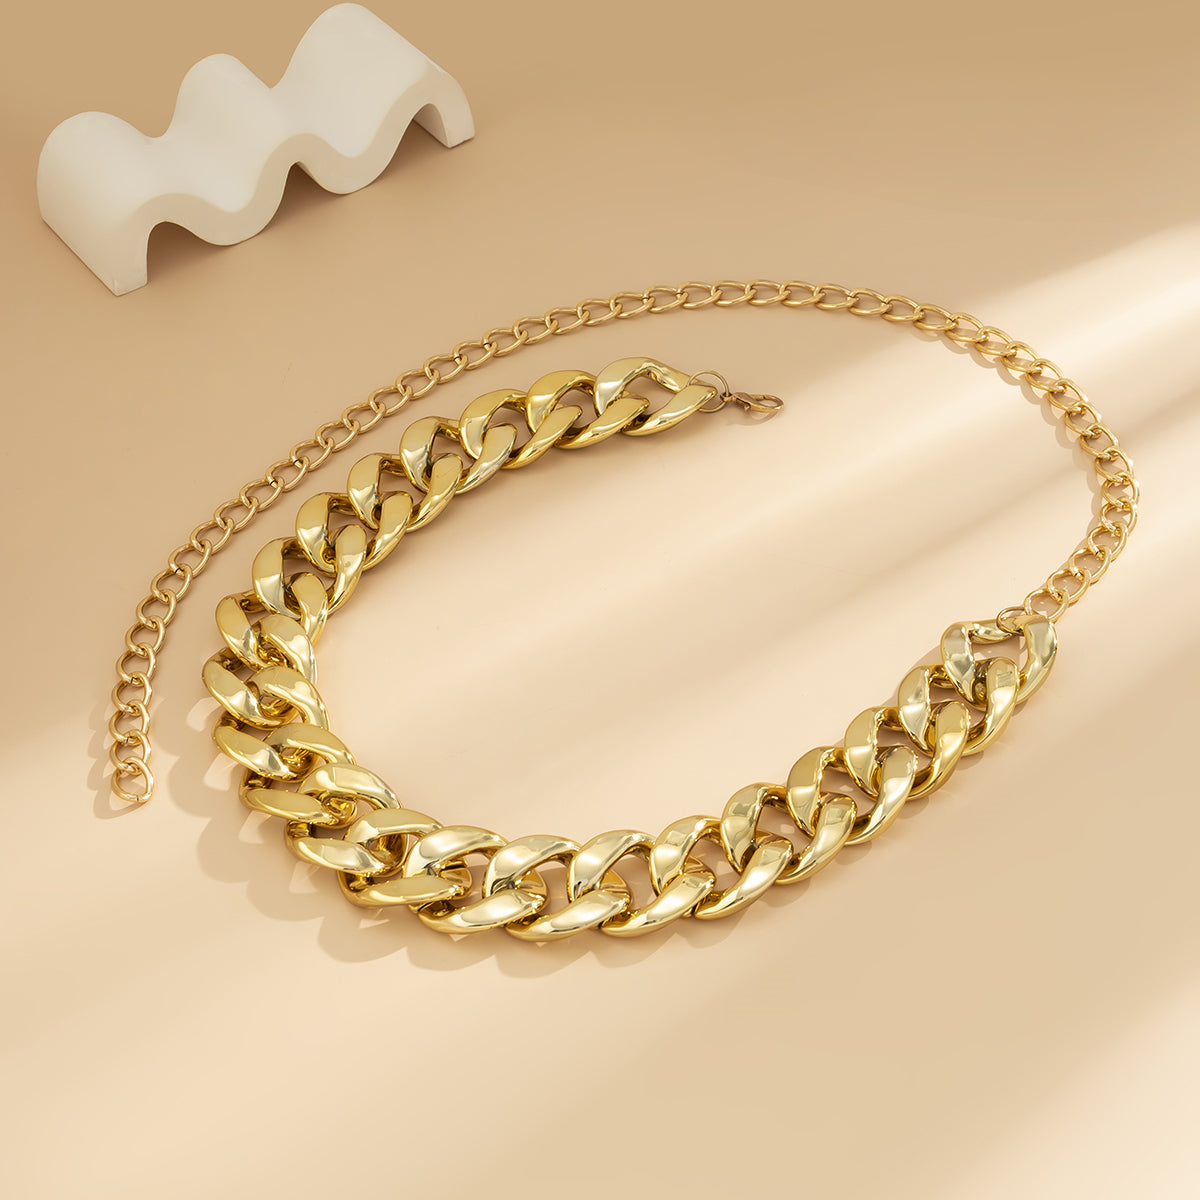 18K Gold-Plated Curb Chain Waist Belt